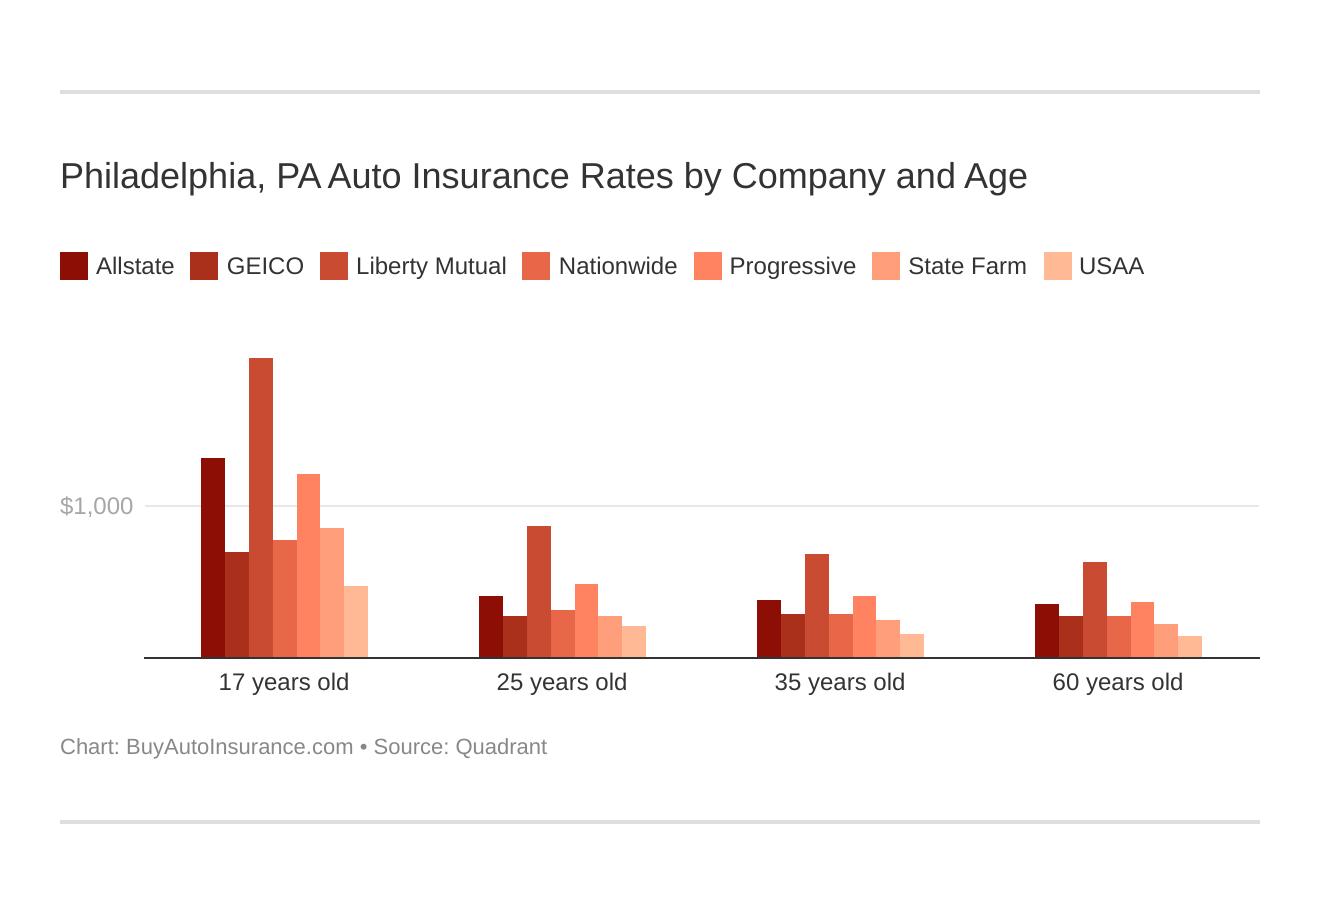 Philadelphia, PA Auto Insurance Rates by Company and Age